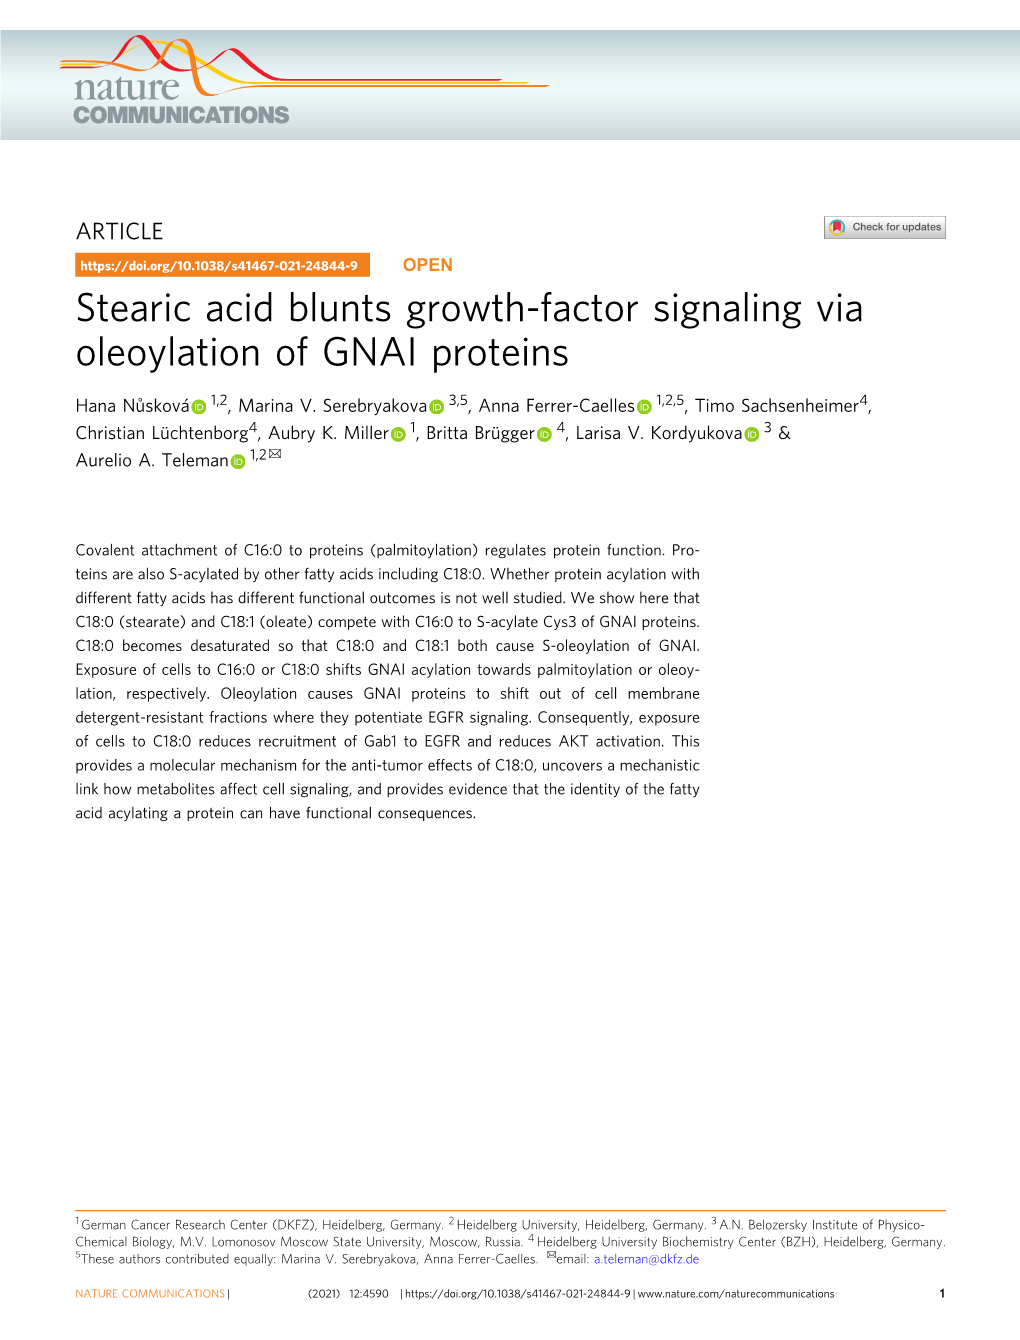 Stearic Acid Blunts Growth-Factor Signaling Via Oleoylation of GNAI Proteins